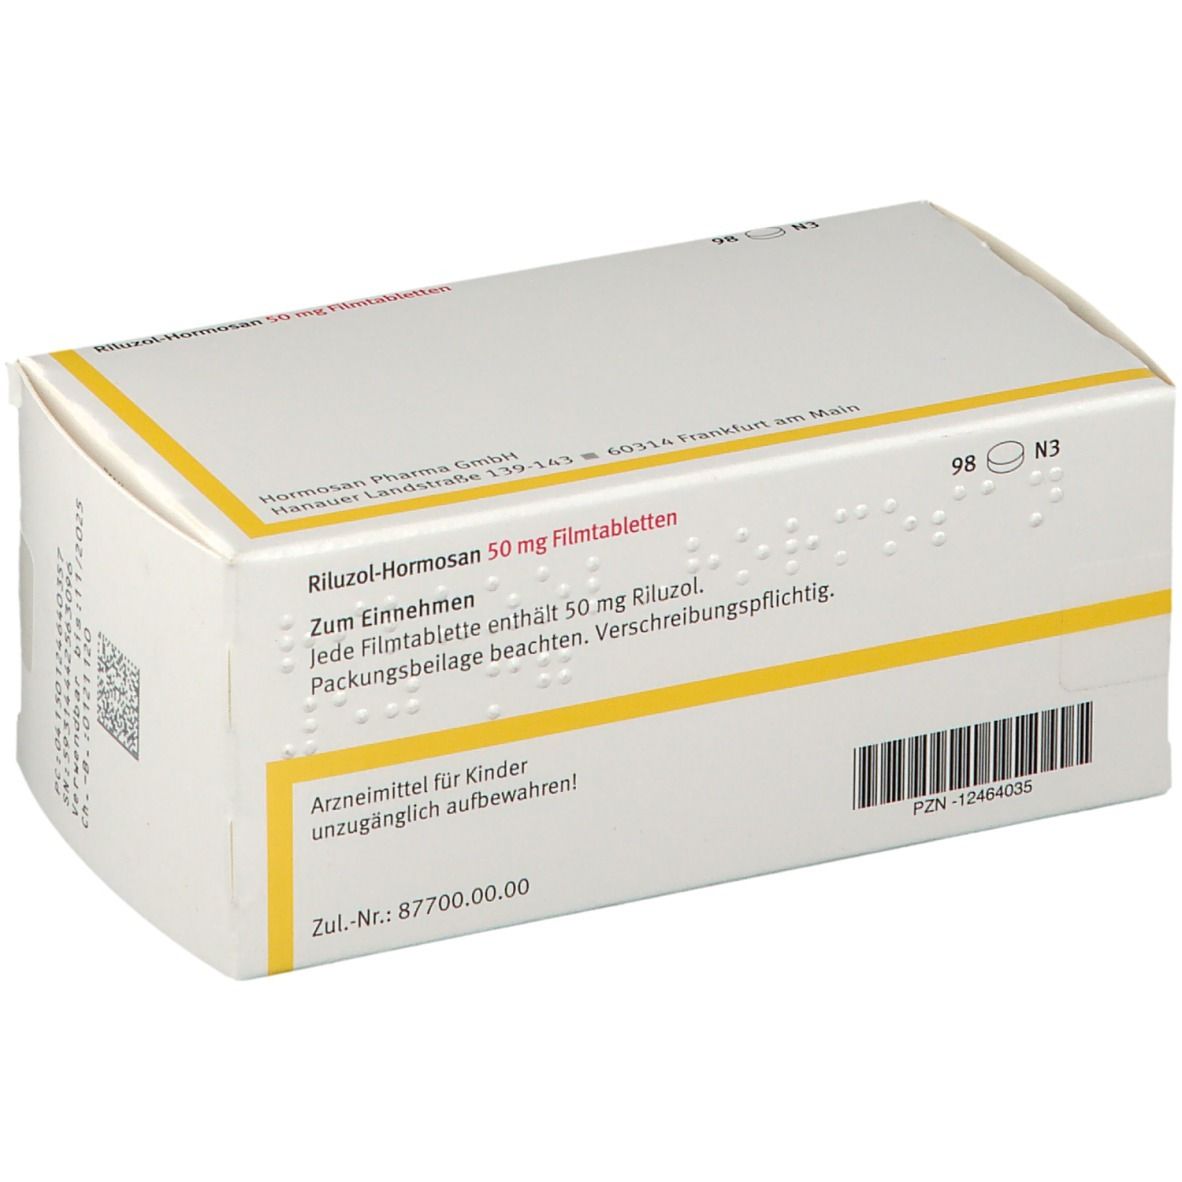 Riluzol-Hormosan 50 mg